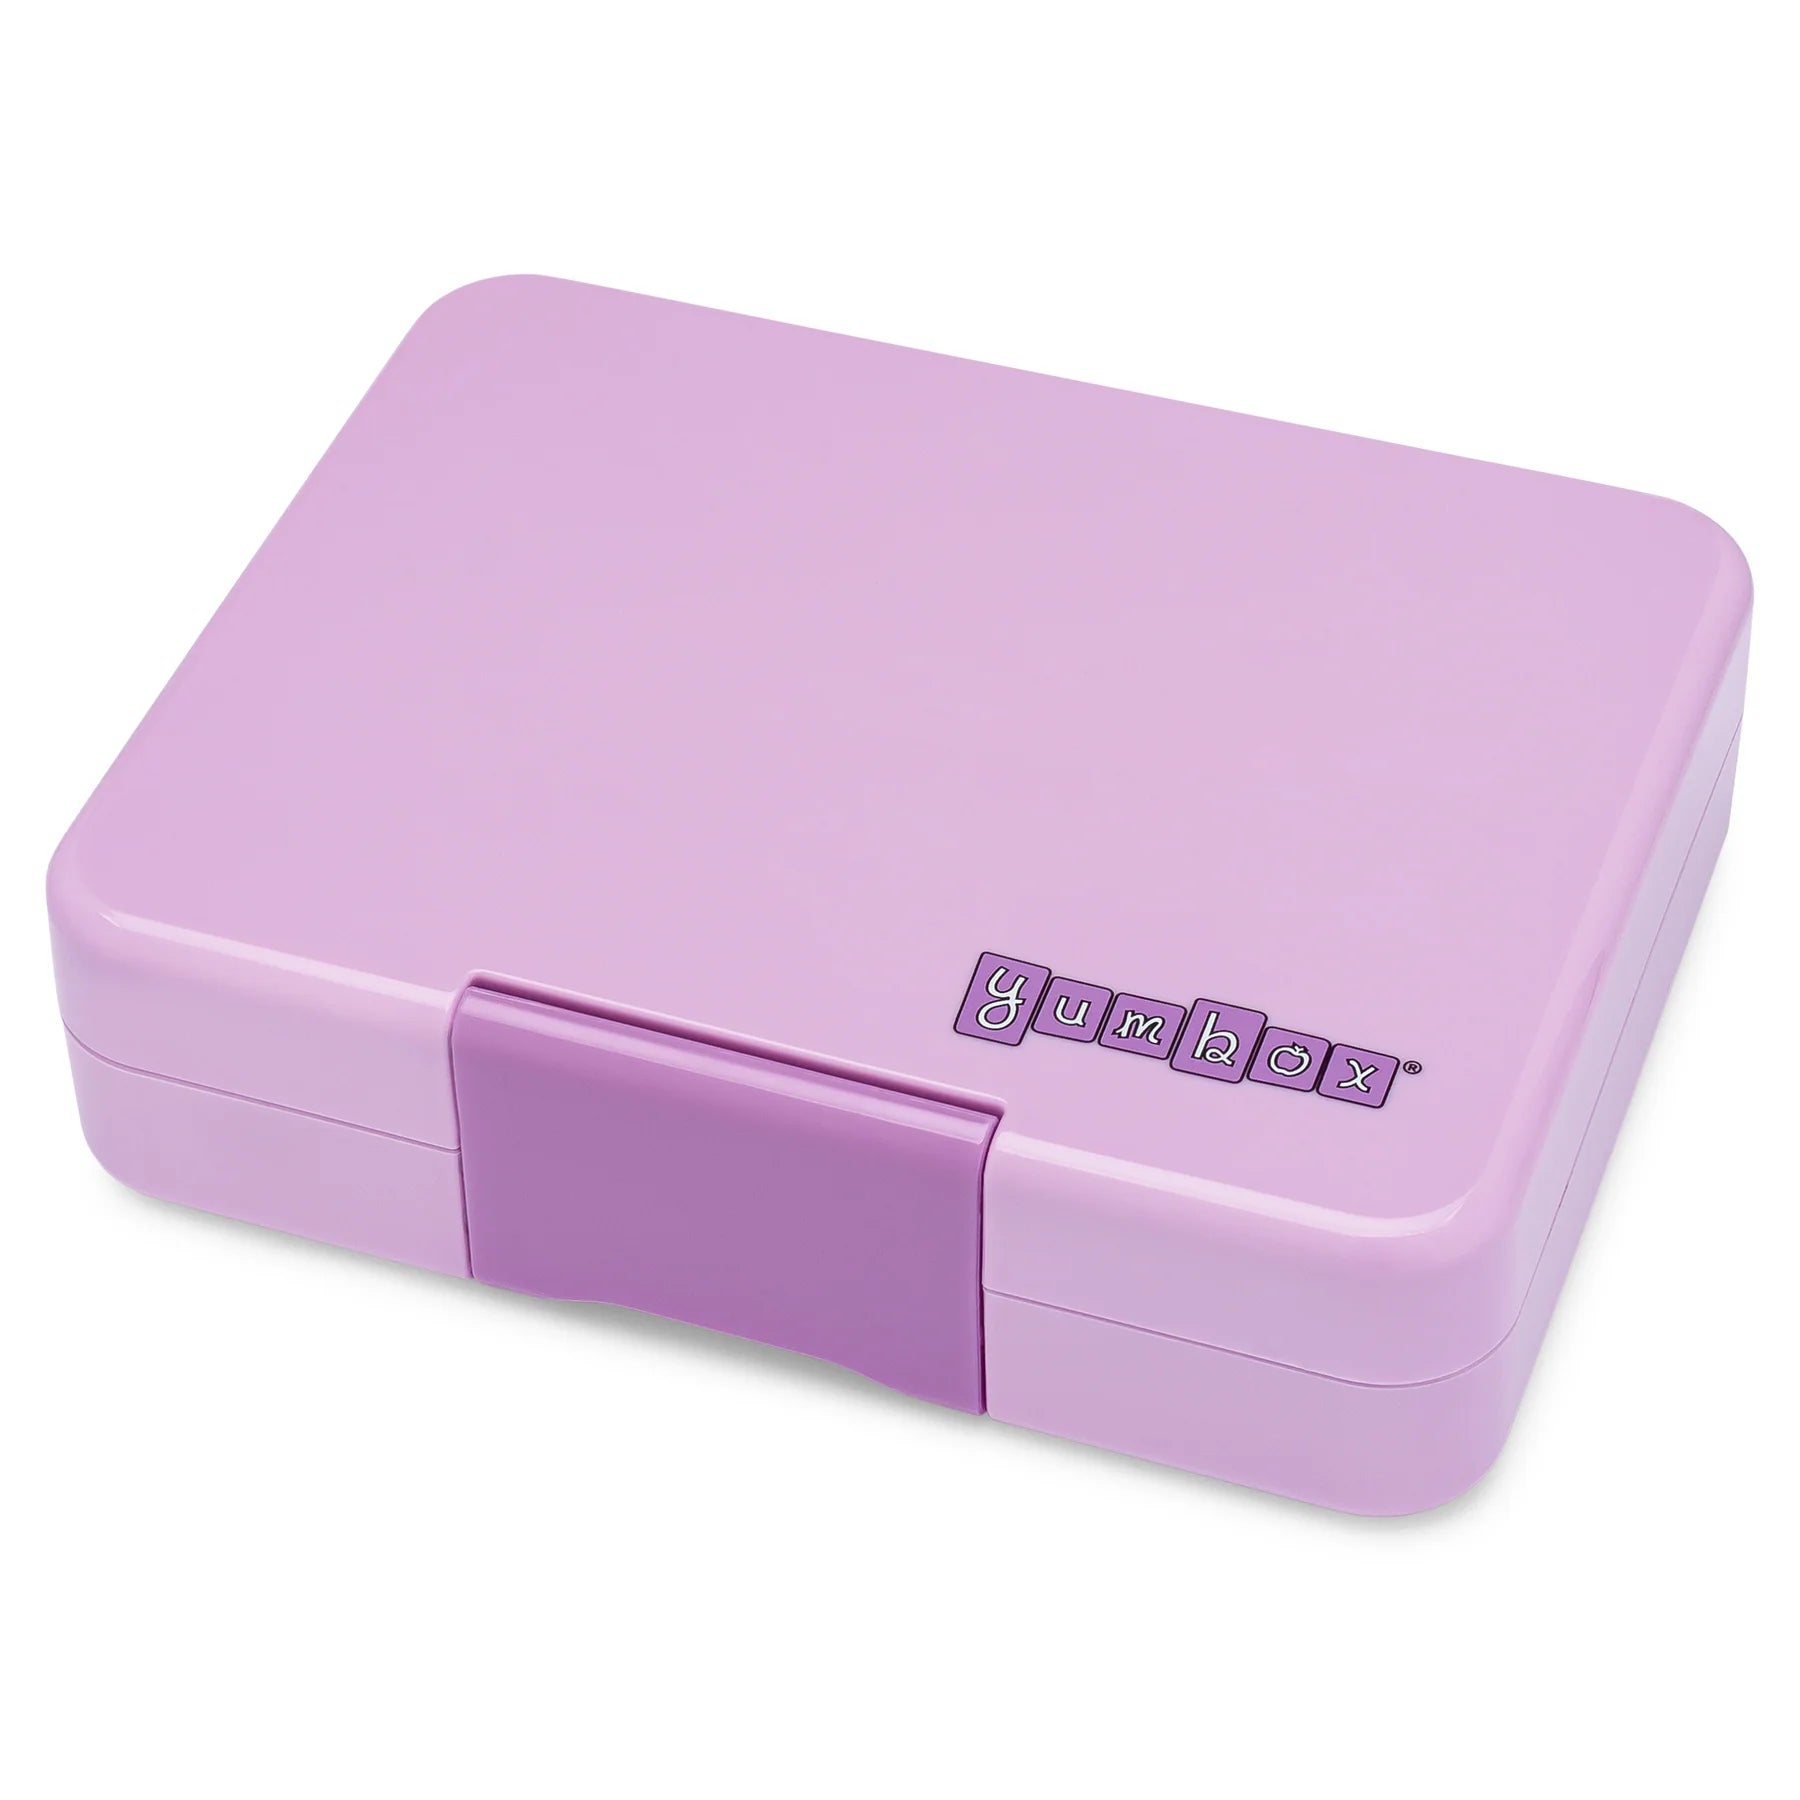 Yumbox Snack 3-Compartment Snack Box - Lulu Purple/Rainbow Tray